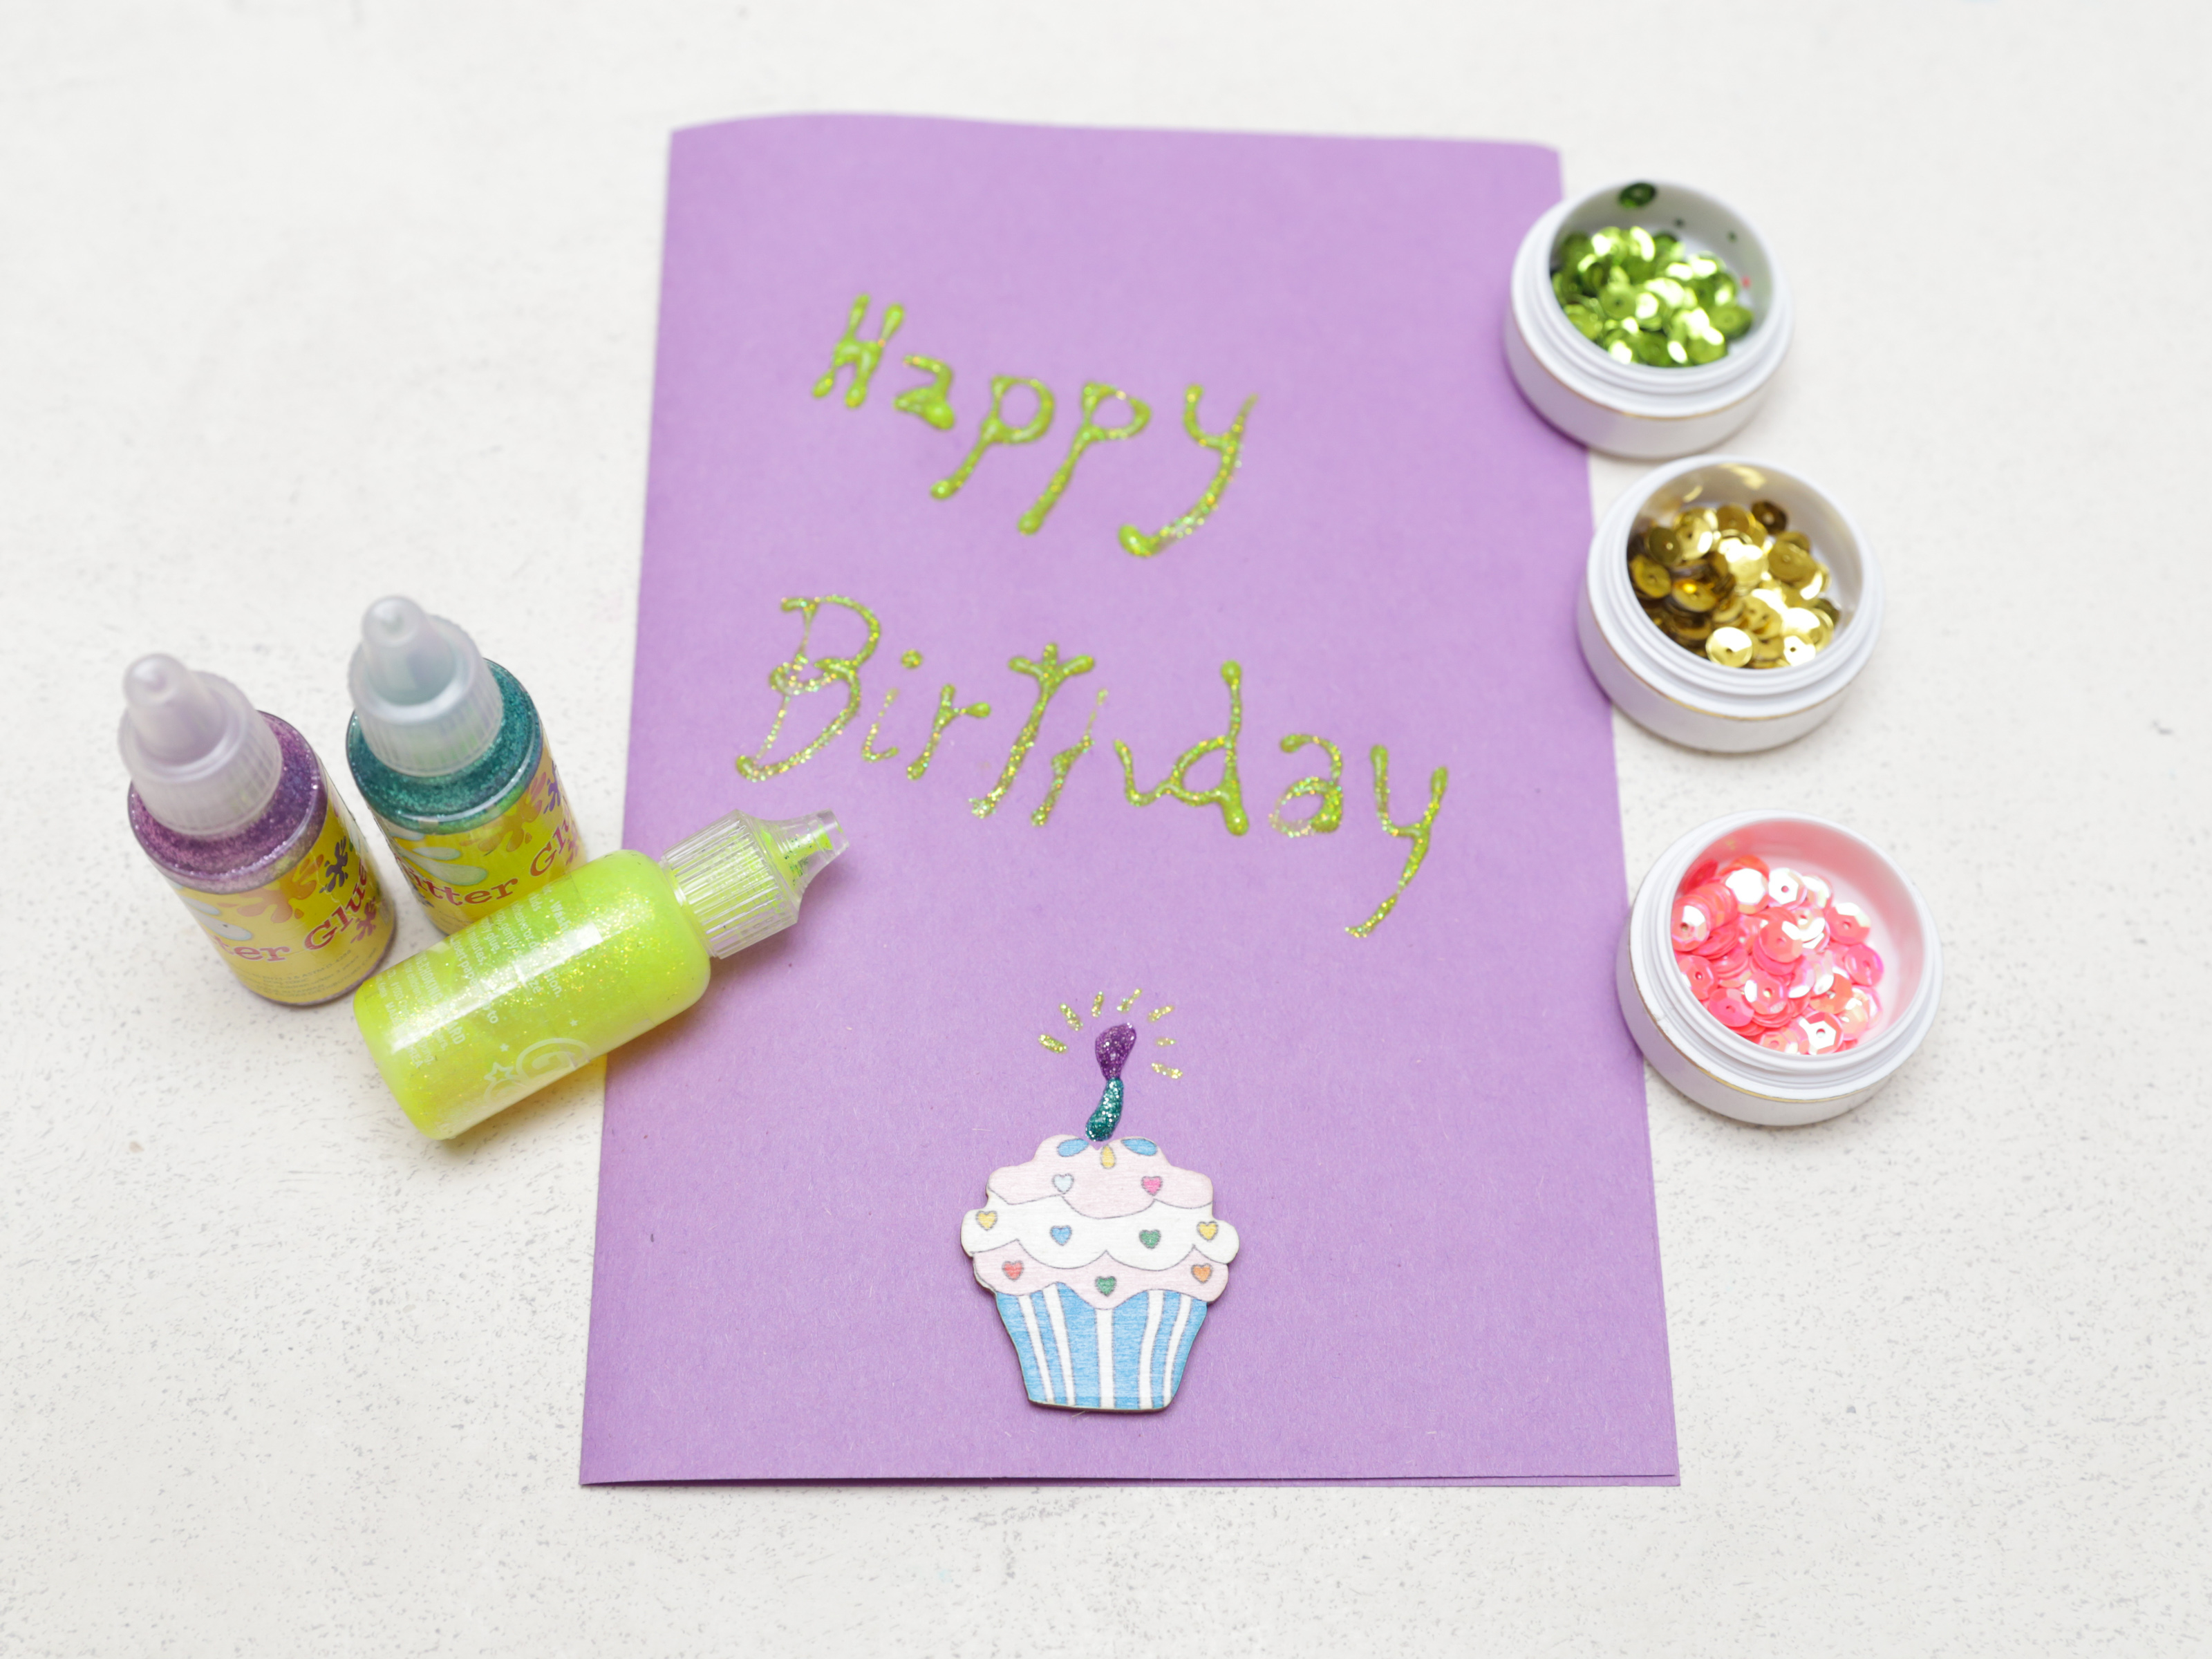 Handmade Birthday Invitation Cards Ideas How To Make A Simple Handmade Birthday Card 15 Steps